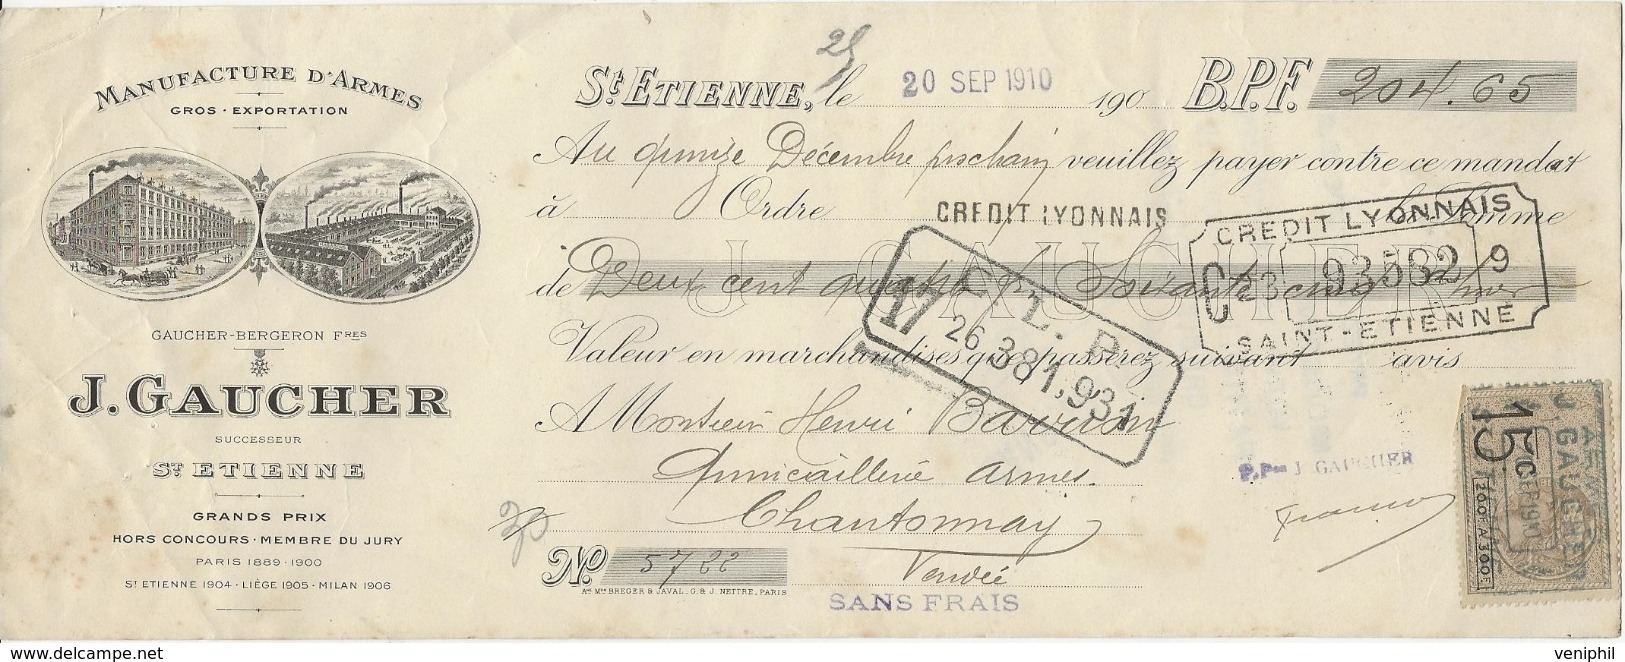 TRAITE ILLUSTREE  MANUFACTURE D'ARMES J.GAUCHER - ST ETIENNE - 1910 - Bills Of Exchange